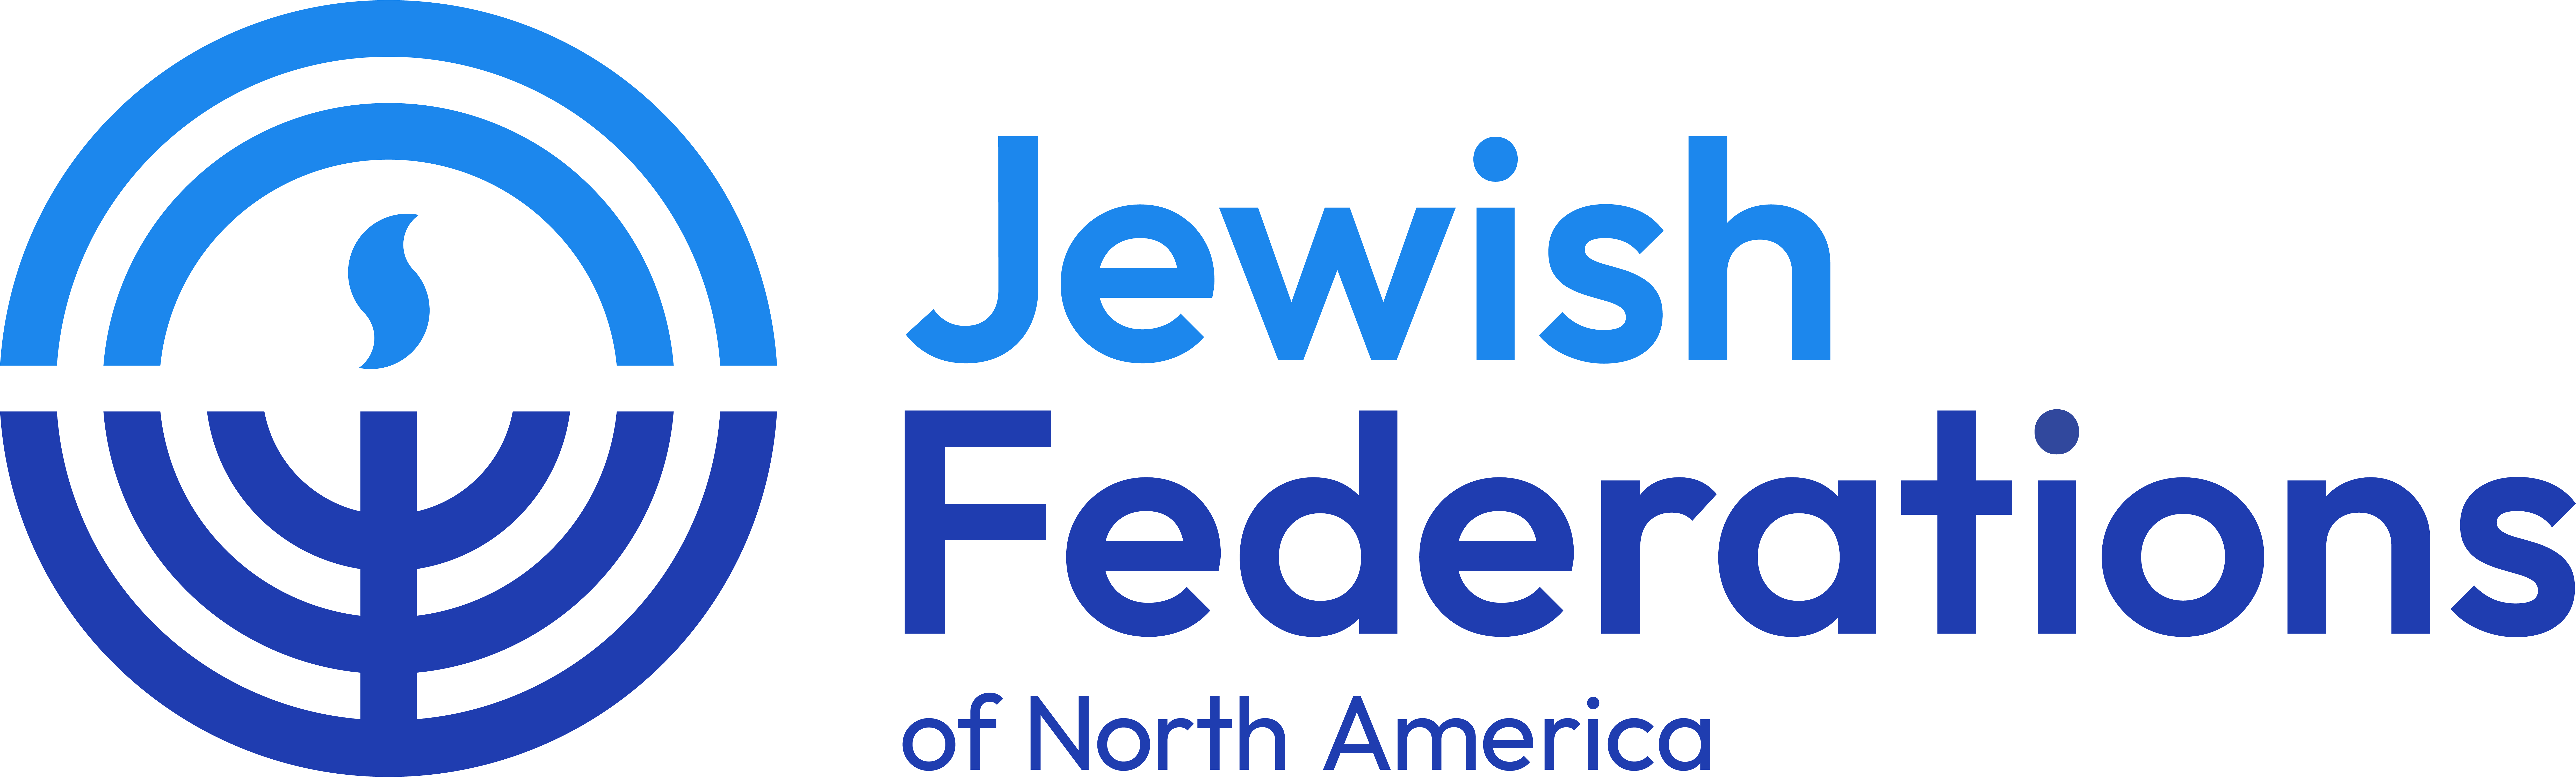 Jewosh Federation of North America